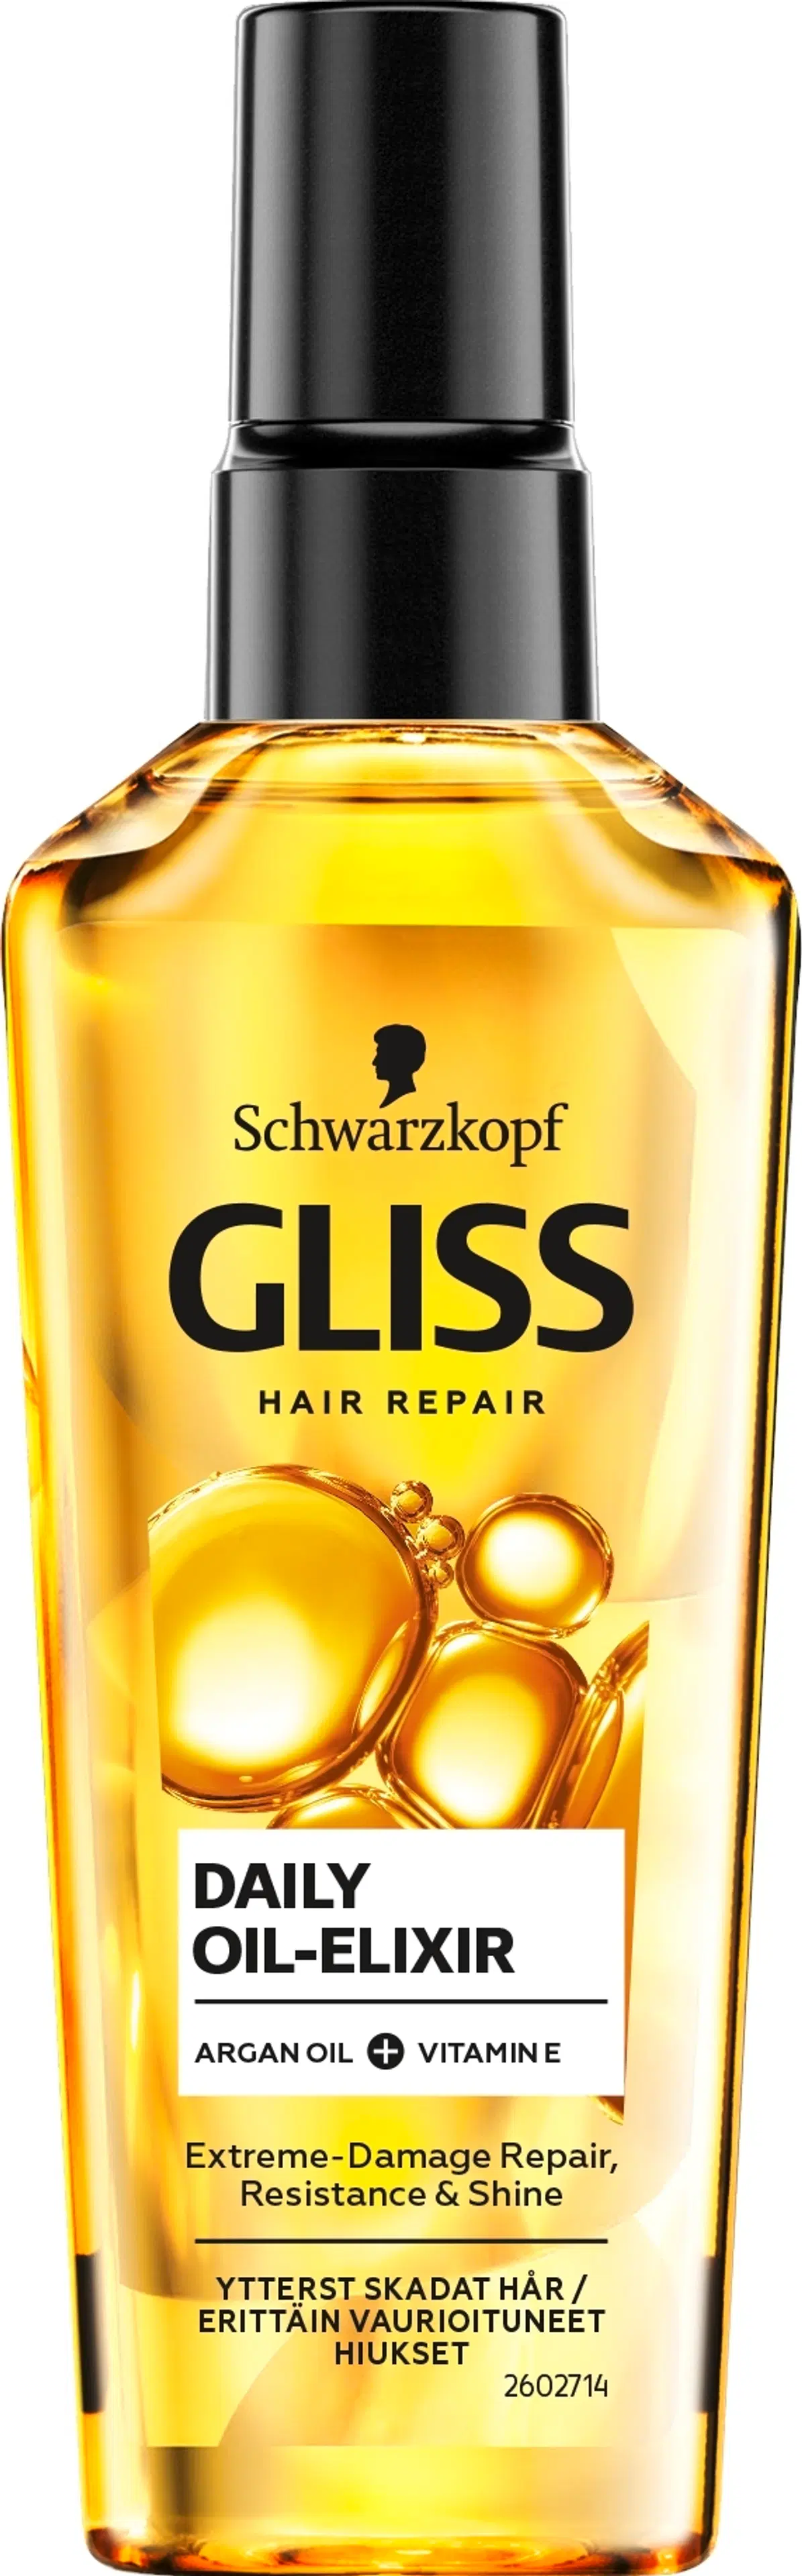 Schwarzkopf Gliss 75ml Daily Oil Elixir hoitoöljy